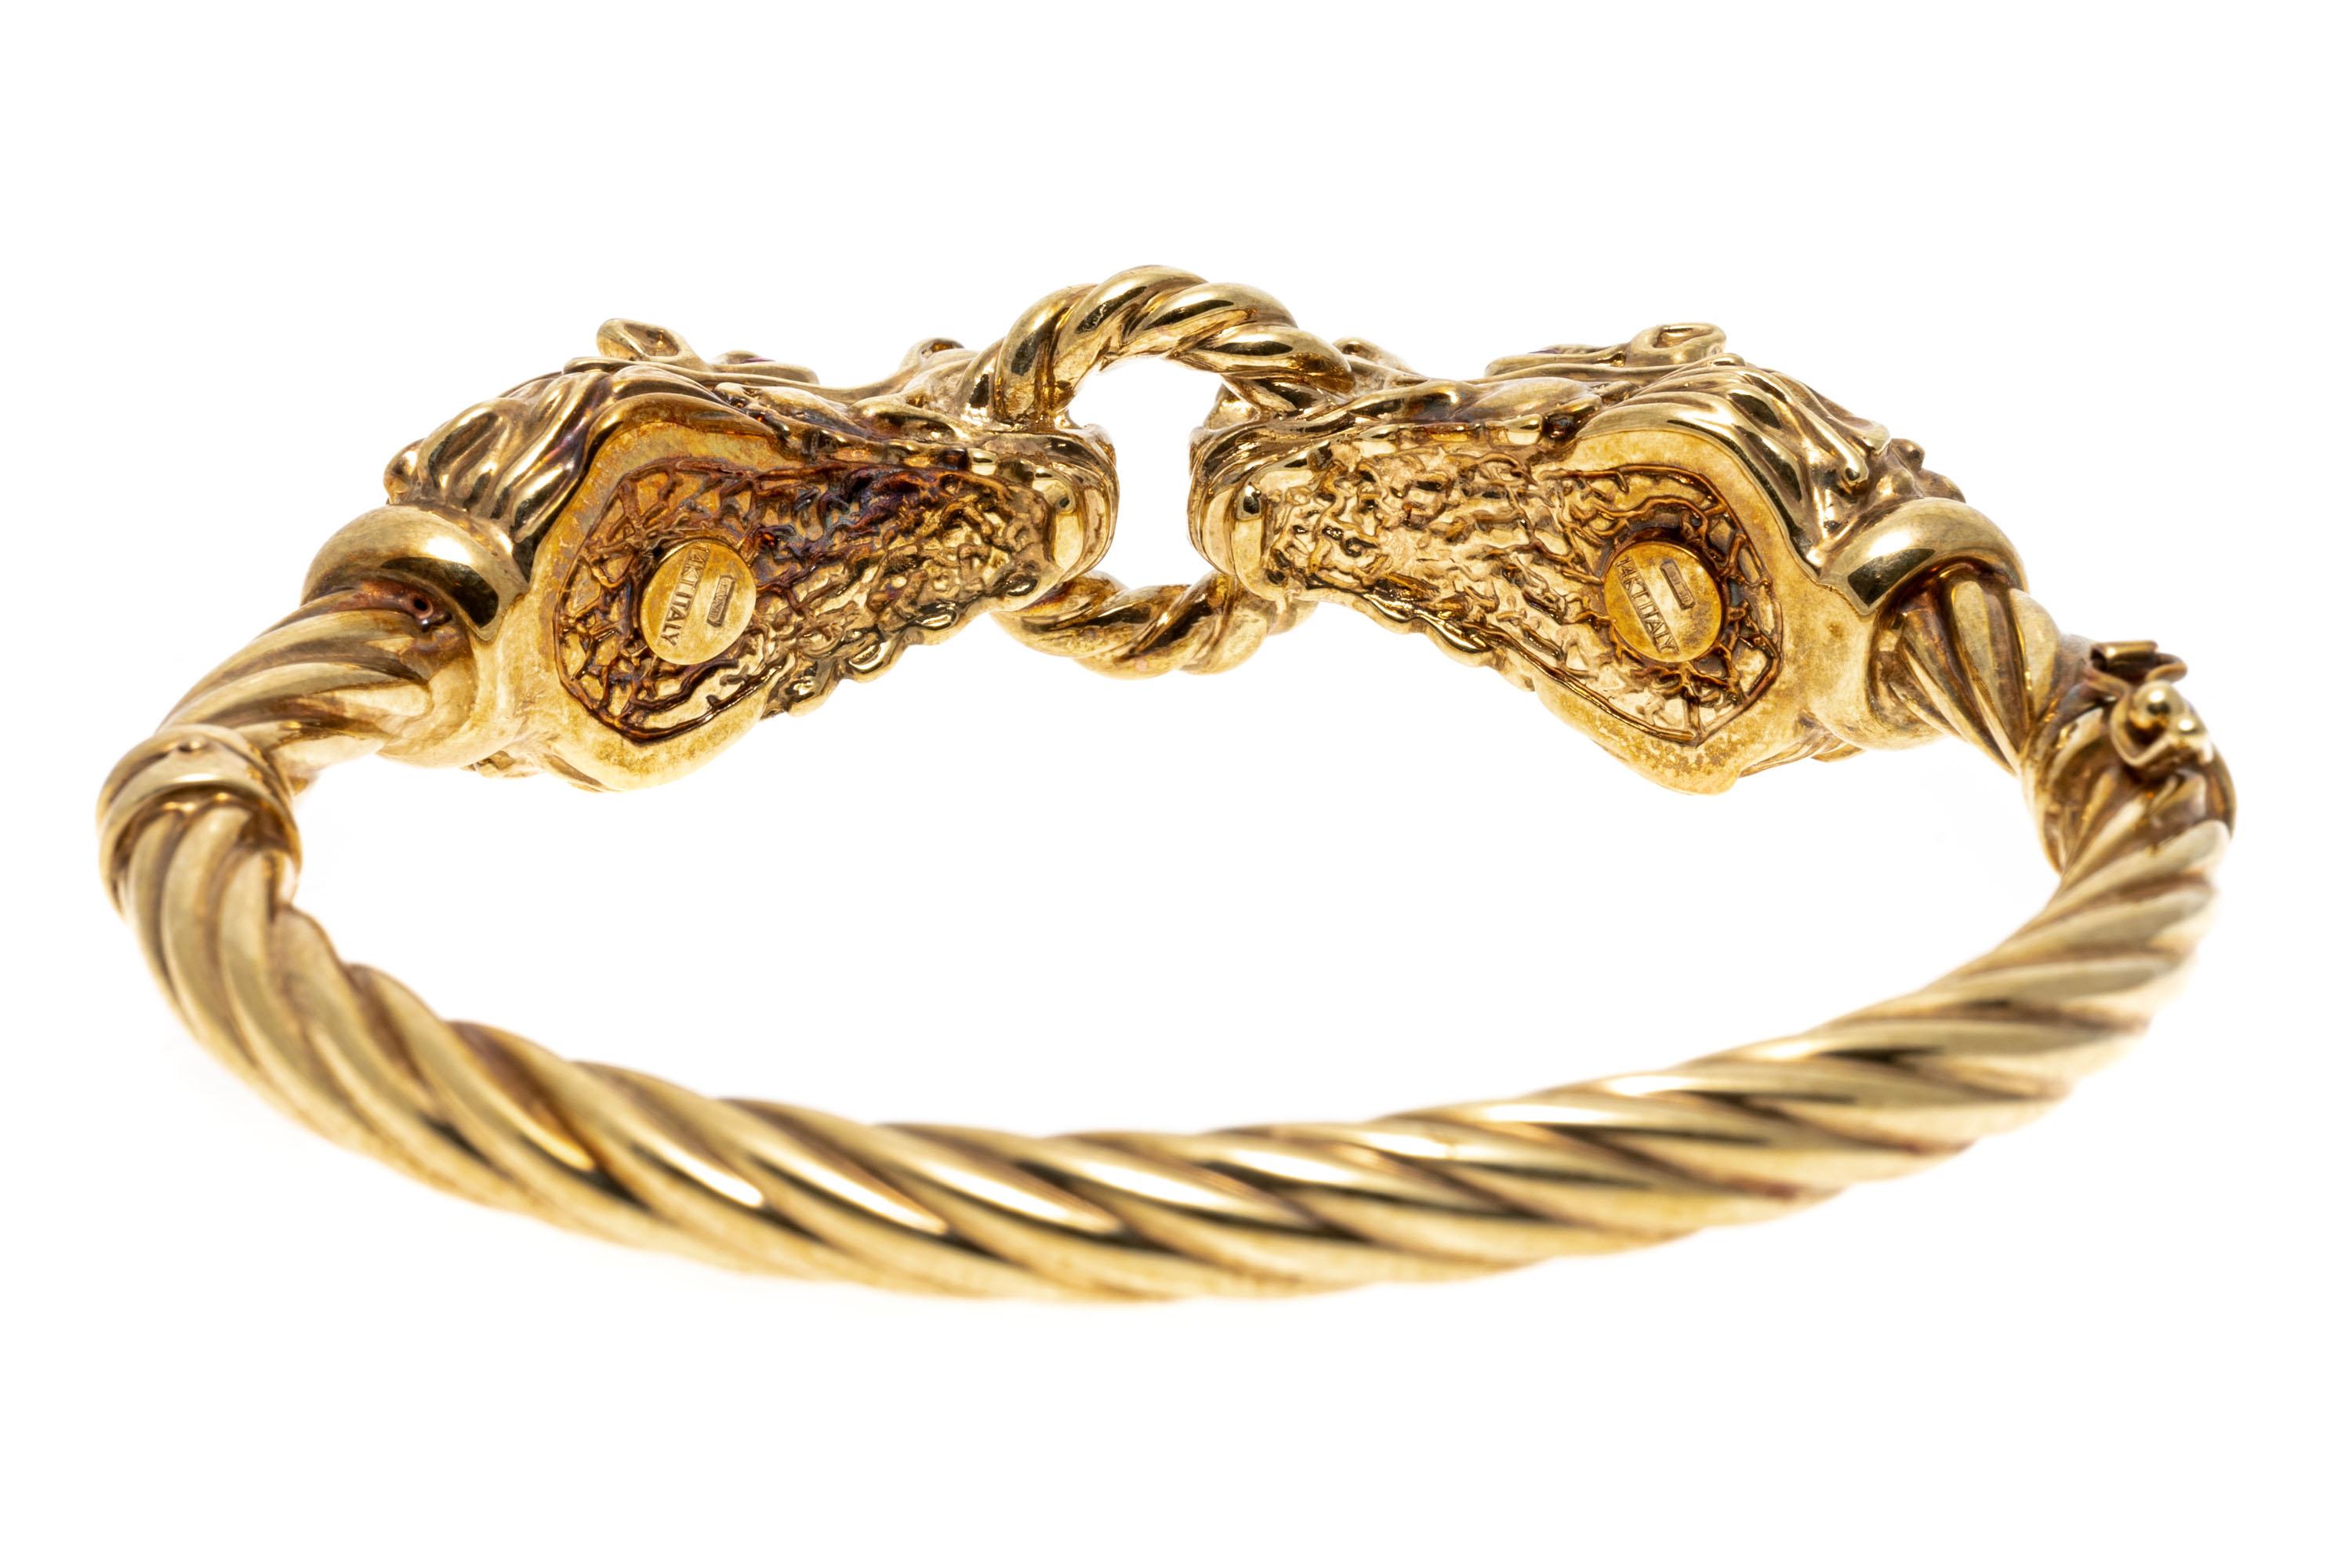 14k Yellow Gold Facing Dragons Hinged Twisted Bangle Bracelet 1